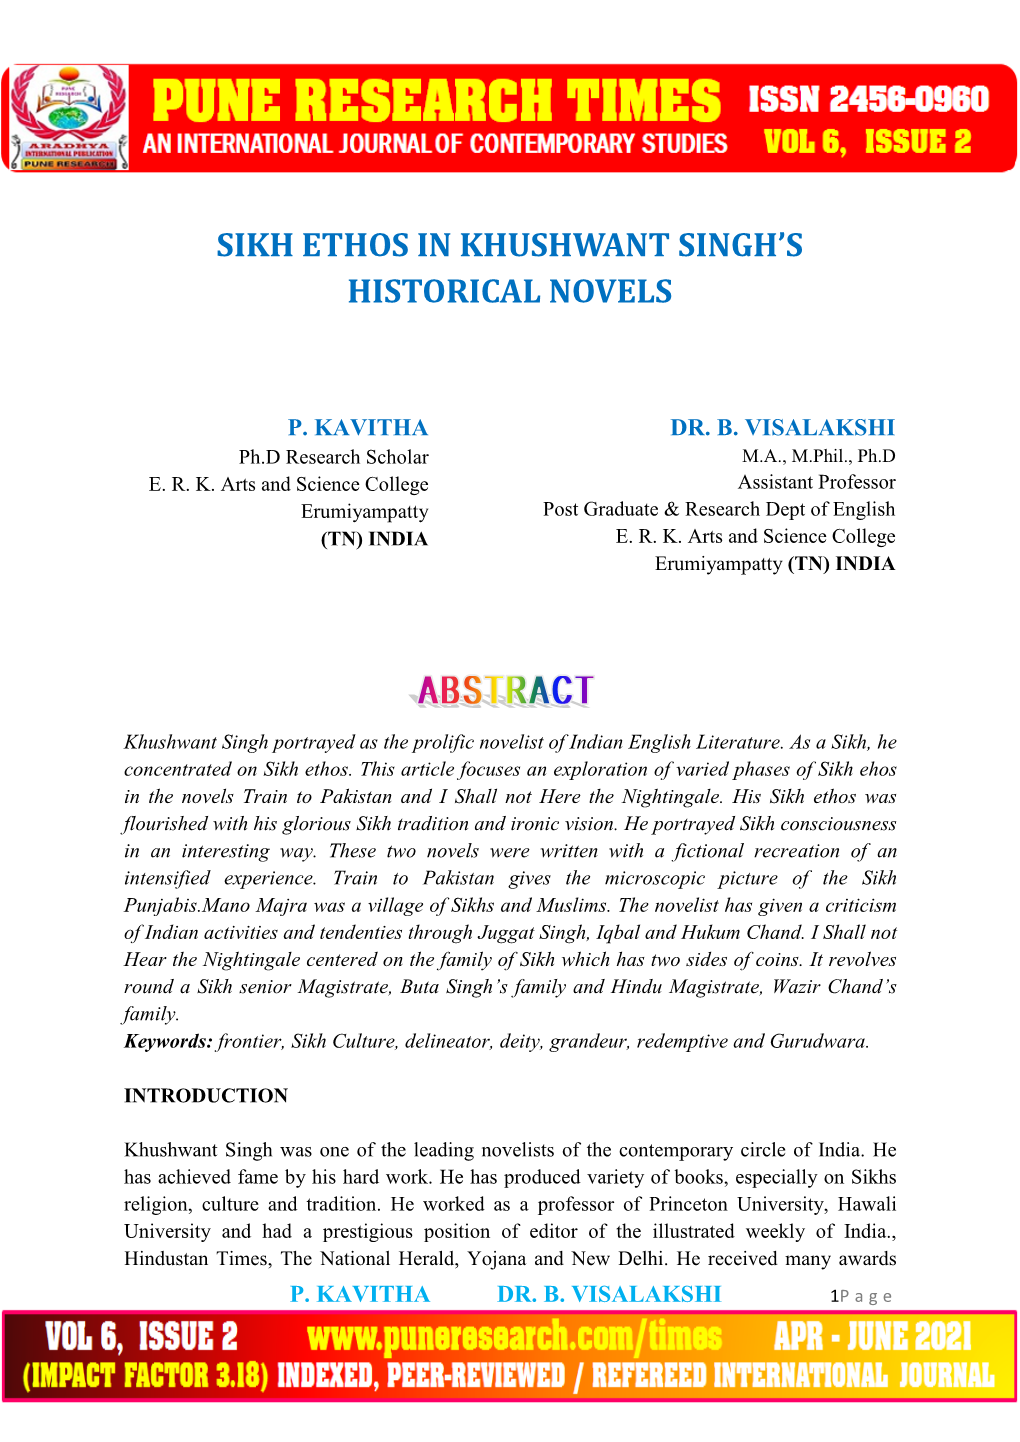 Sikh Ethos in Khushwant Singh's Historical Novels